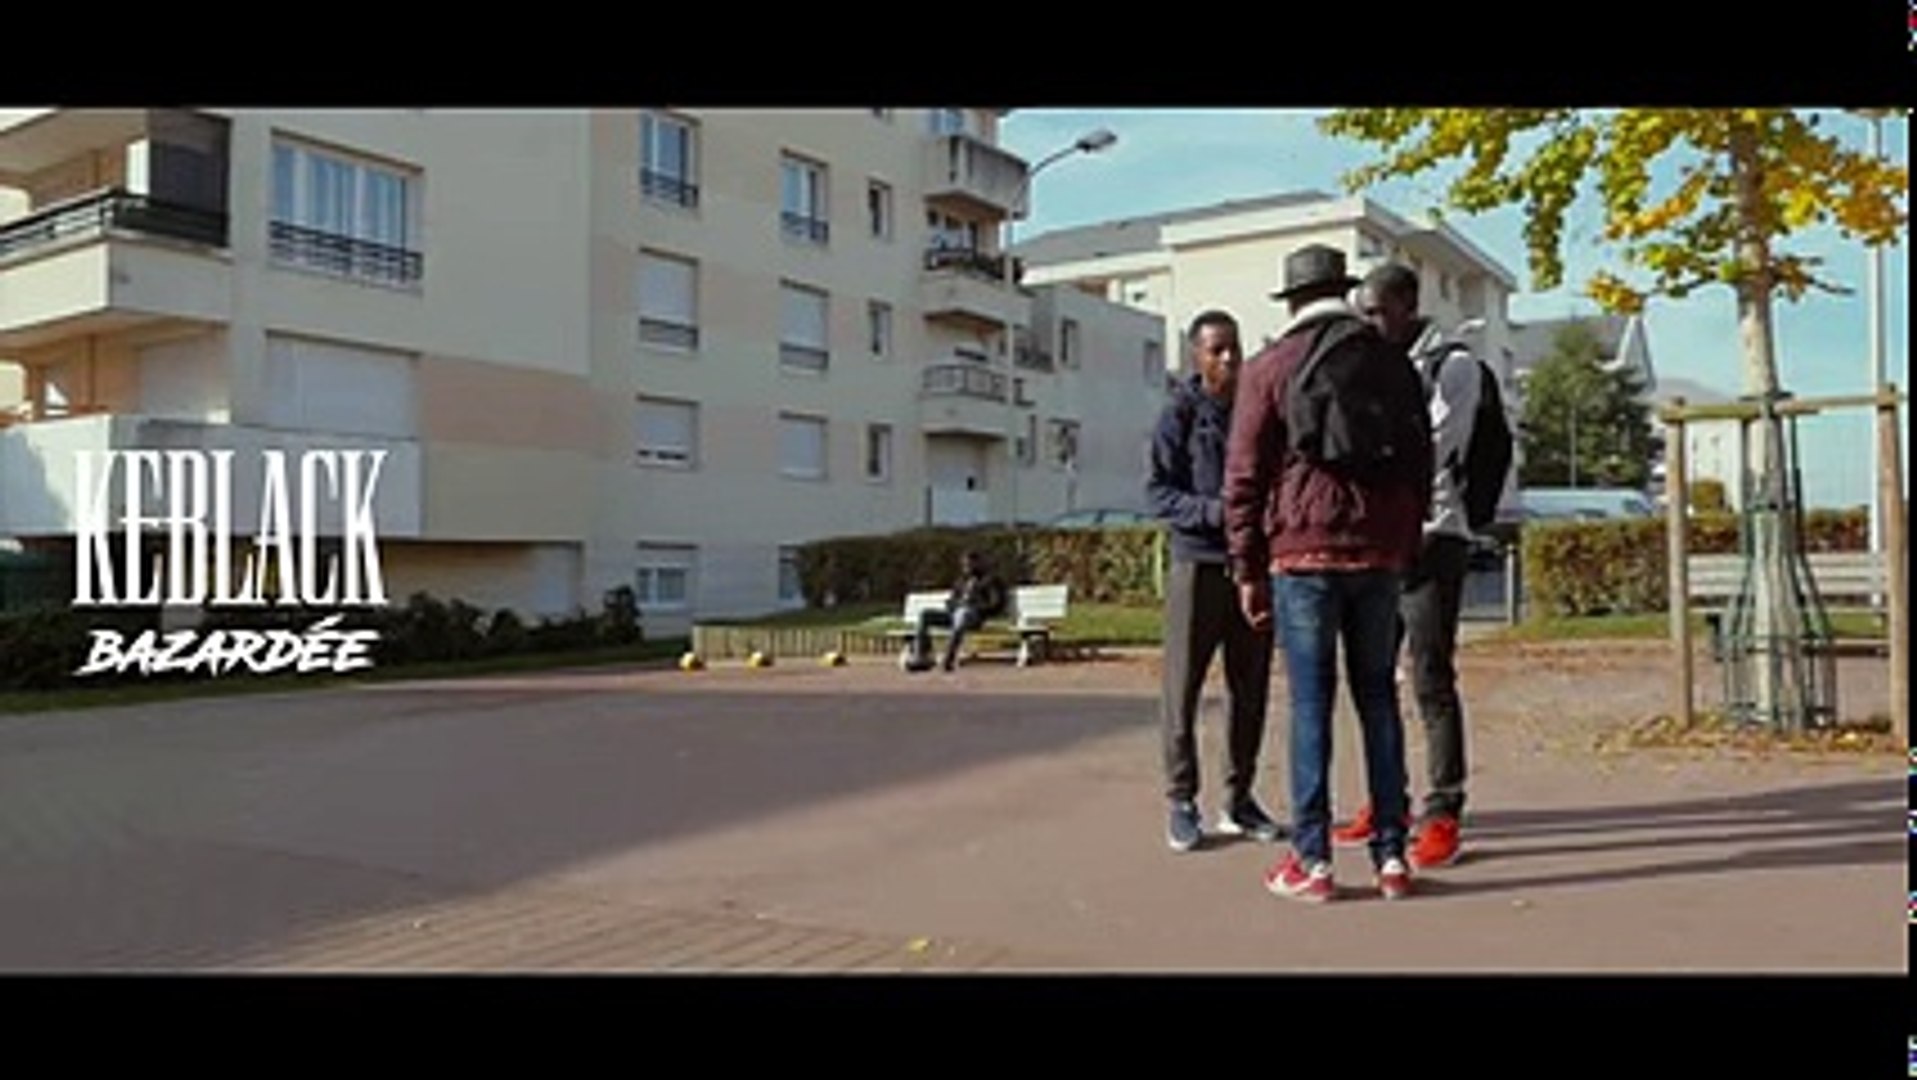 KeBlack - Bazardée (Clip Officiel) - Vidéo Dailymotion